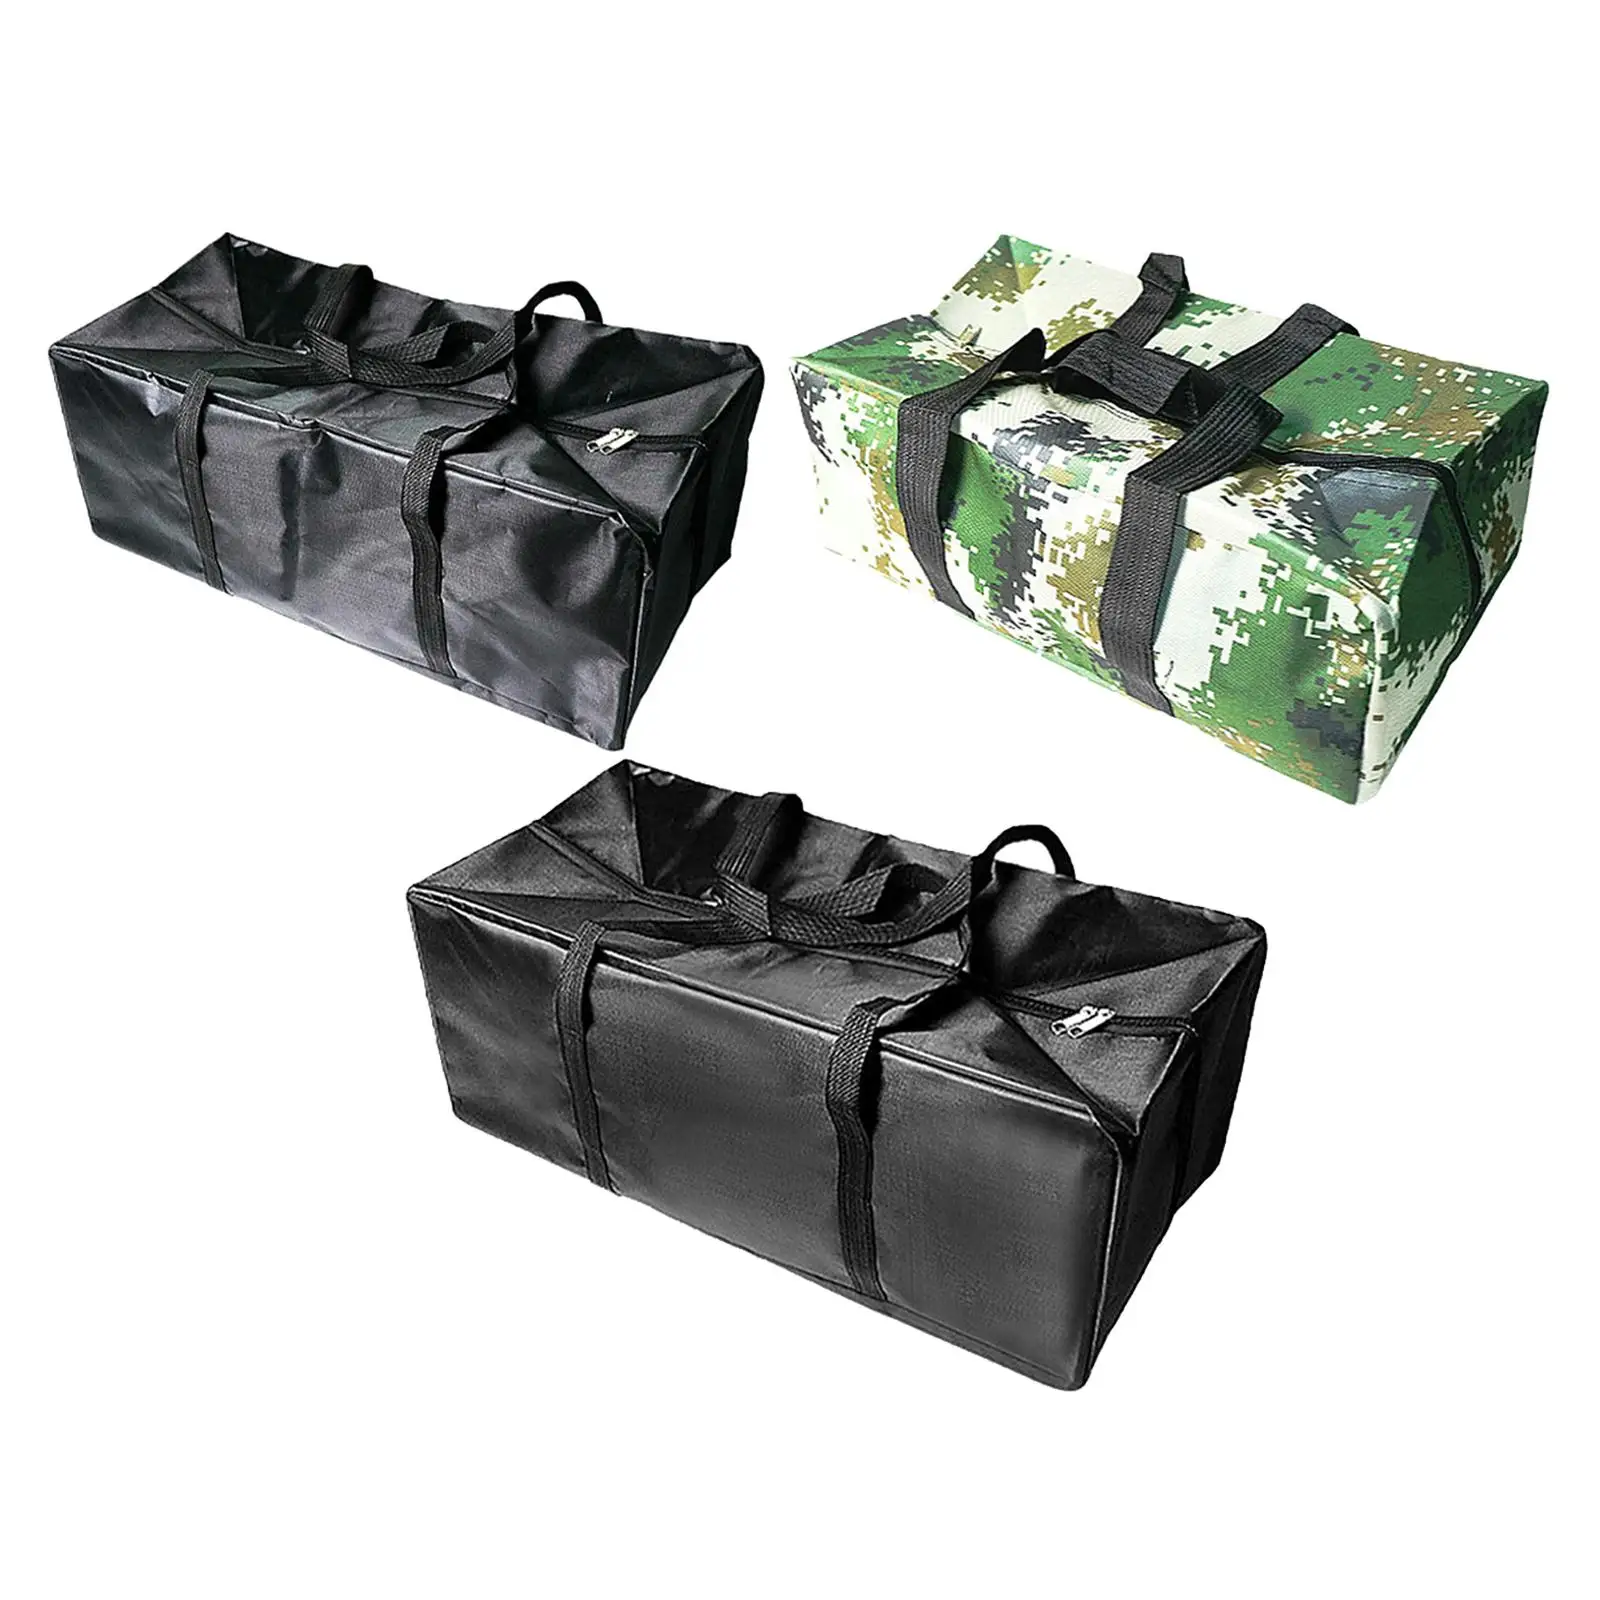   Versatile Collapsible Storage Premium Straps Heavy Duty Boat  Storage Bag for